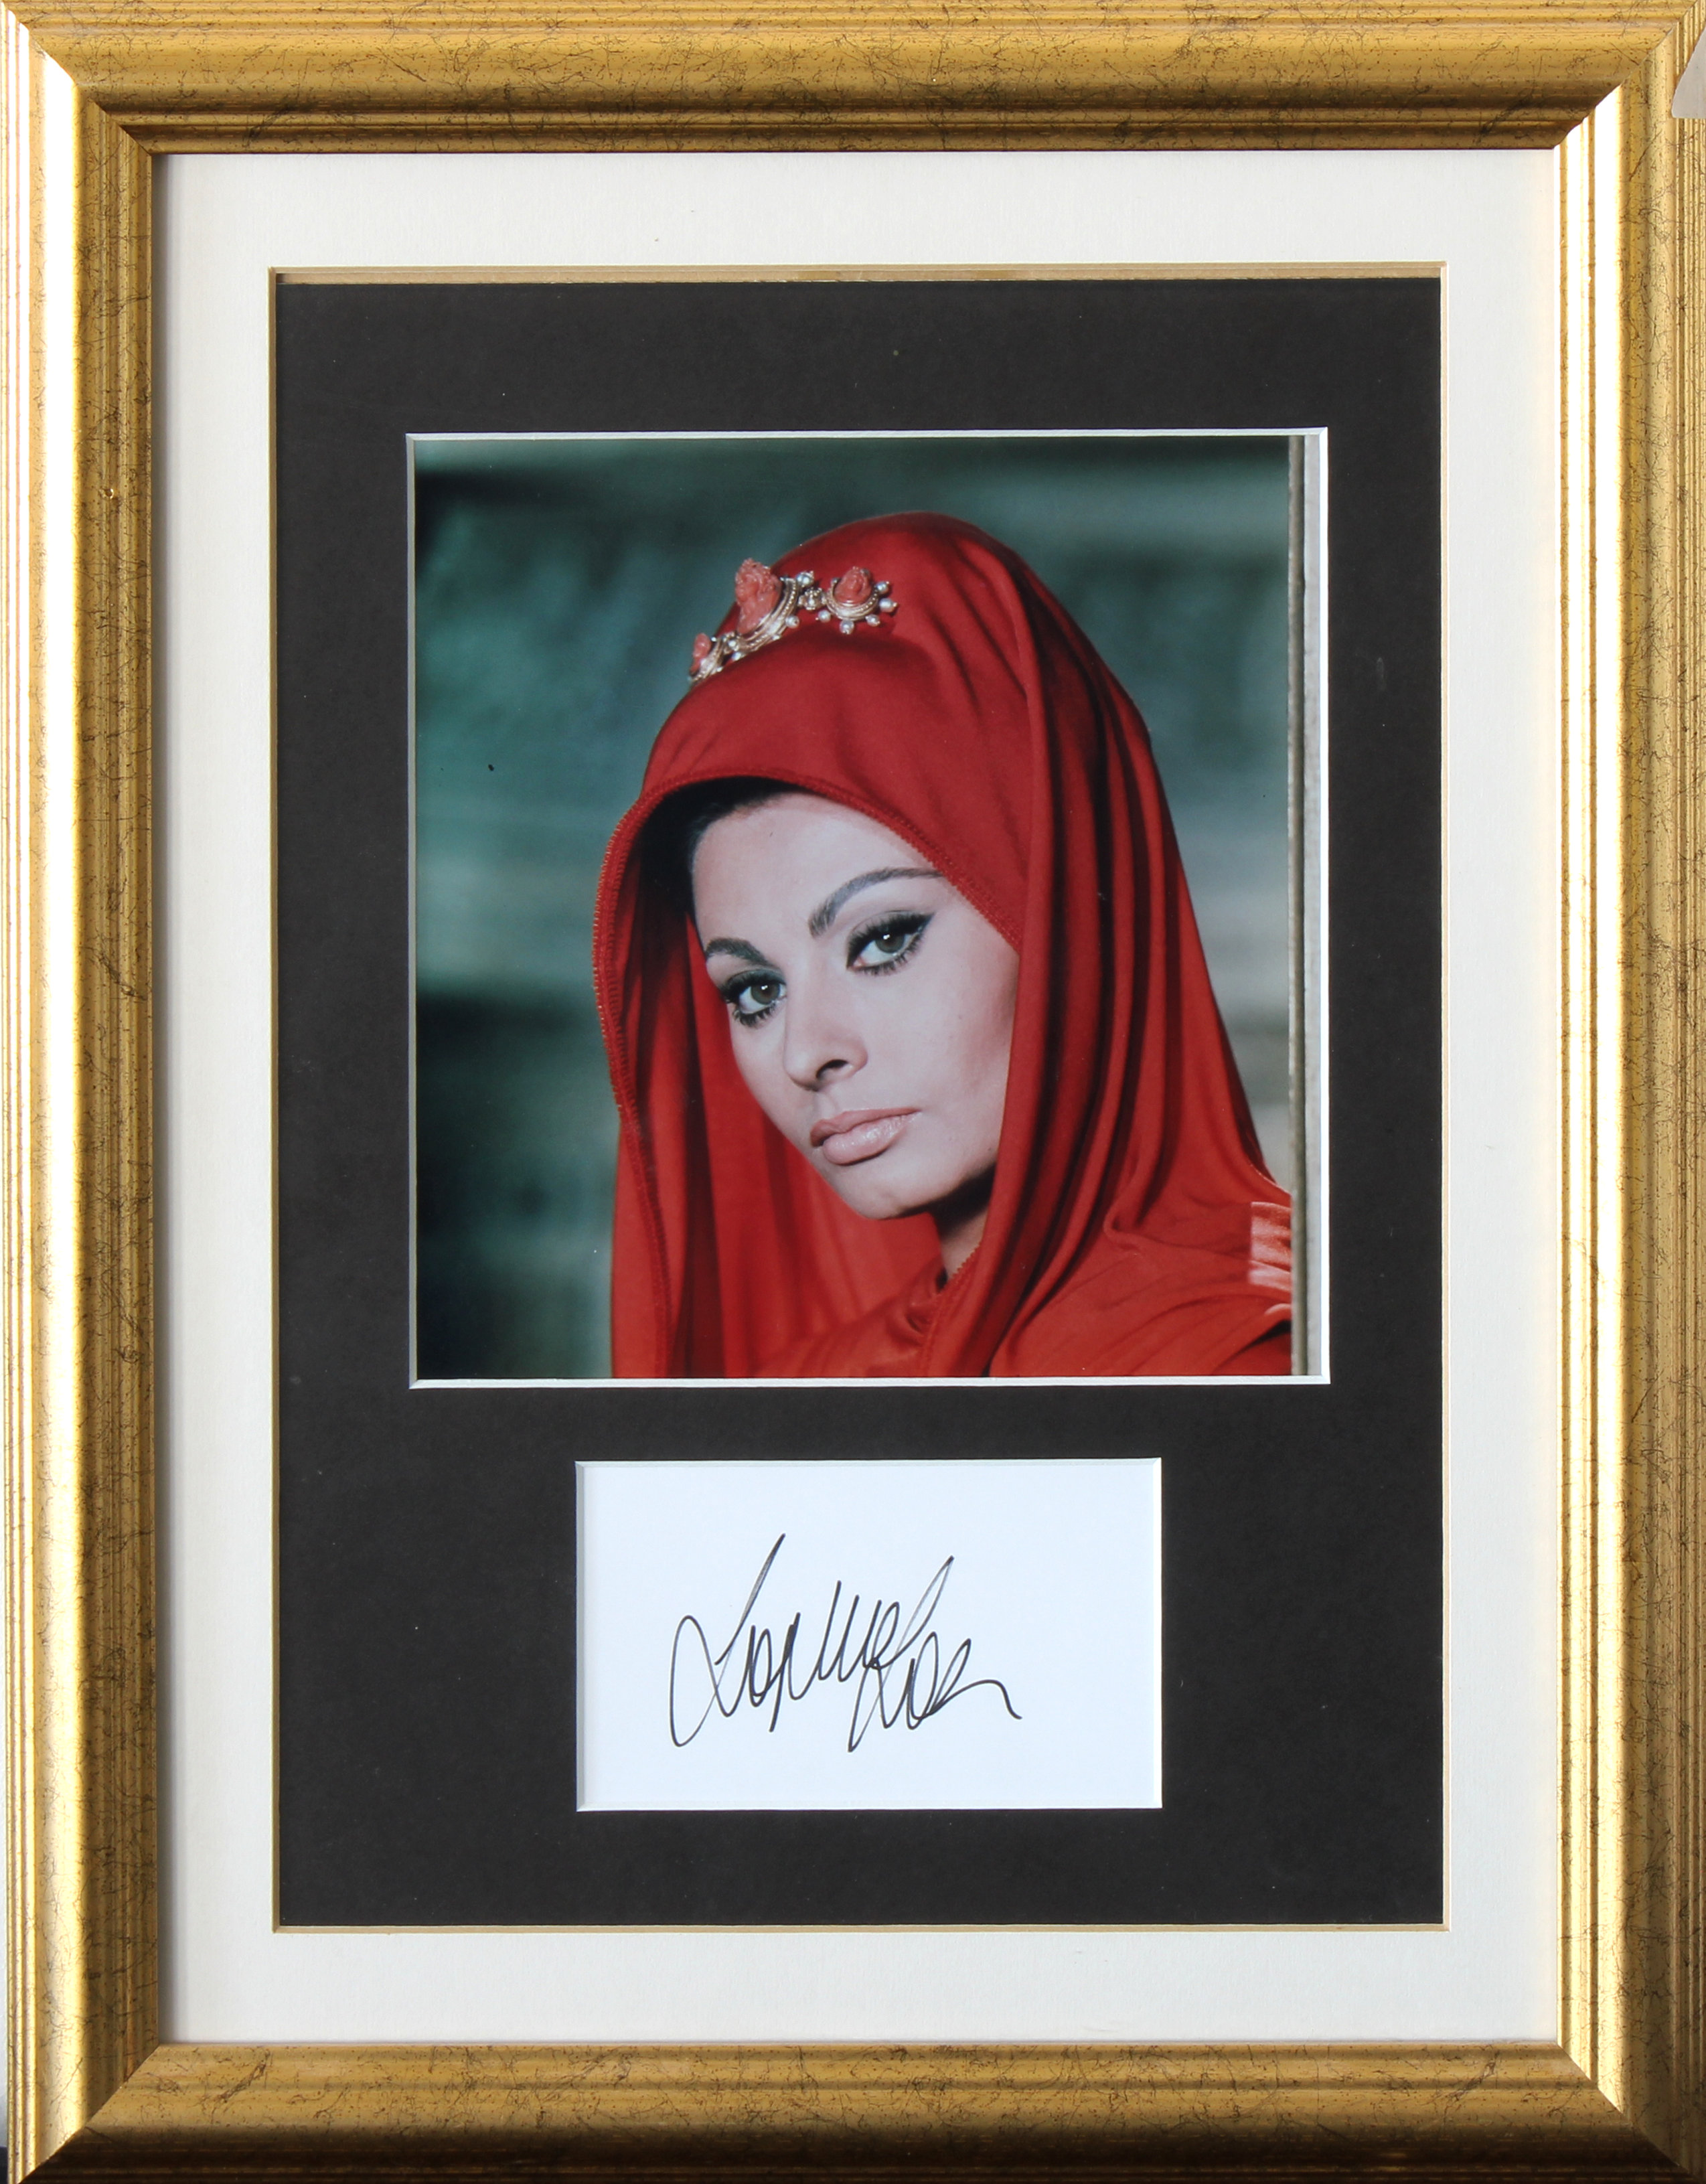 Sophia Loren - Colour photograph with signature inset to mount